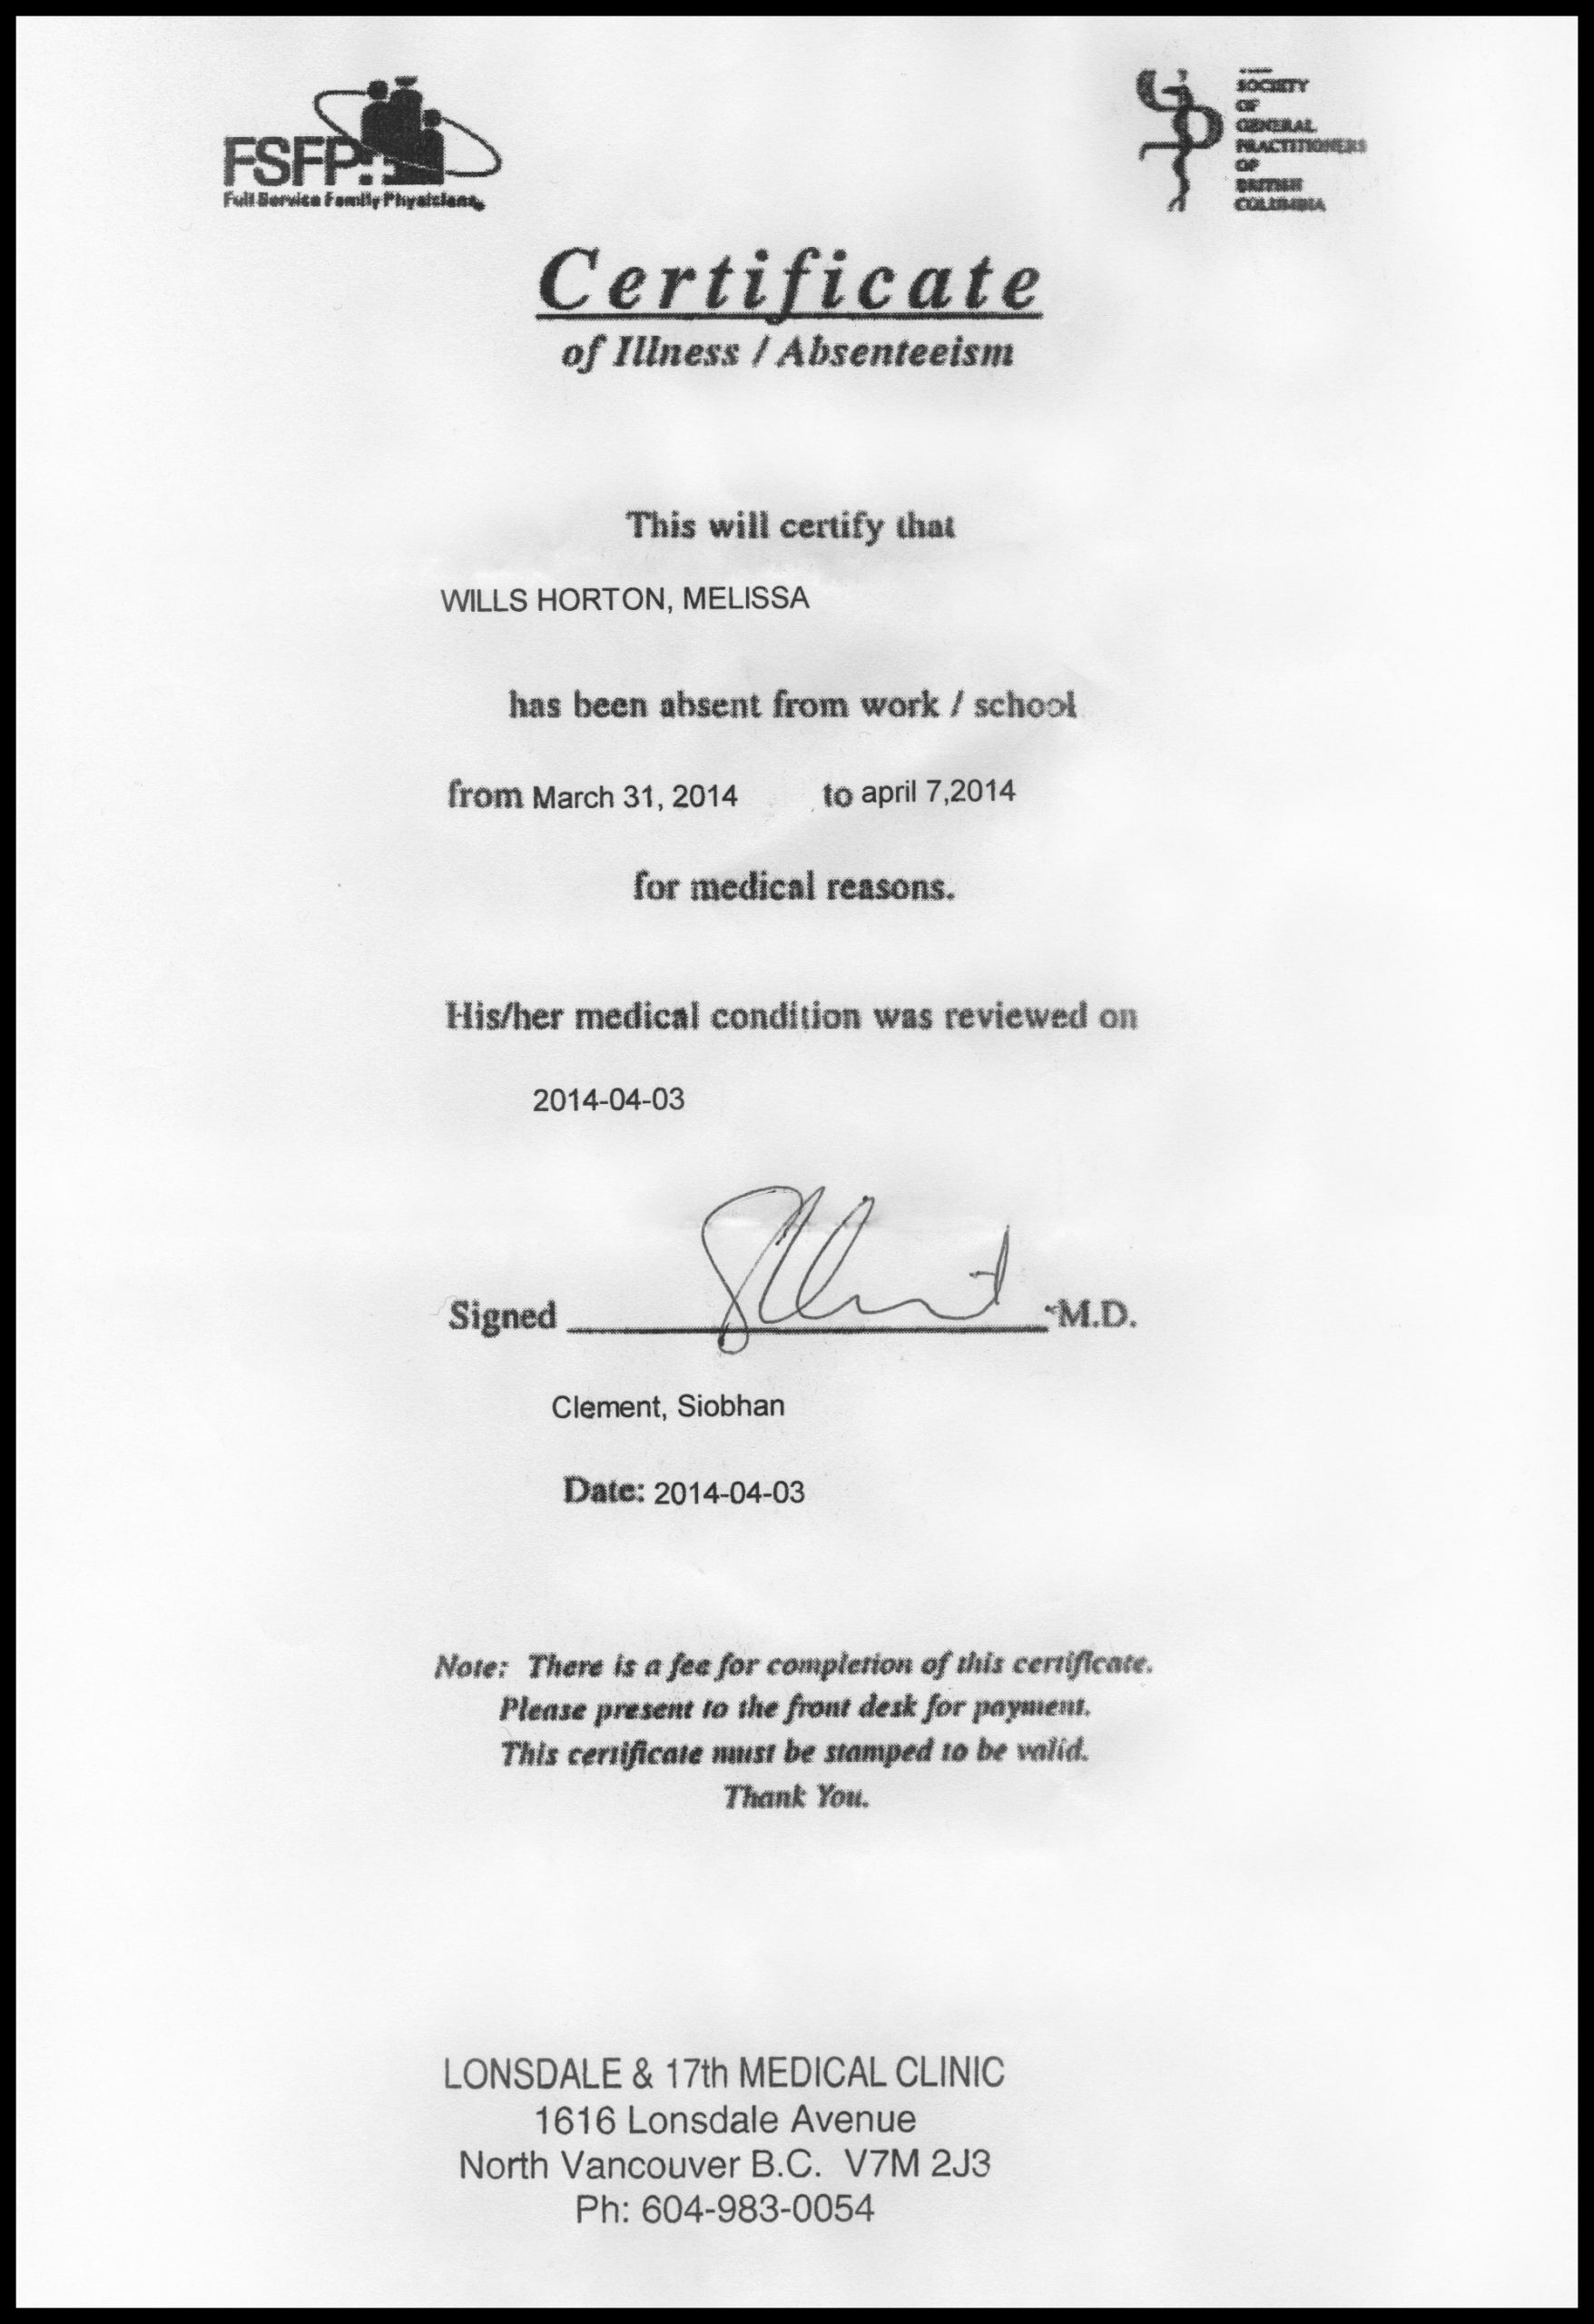 Certificate of Illness/Absenteeism